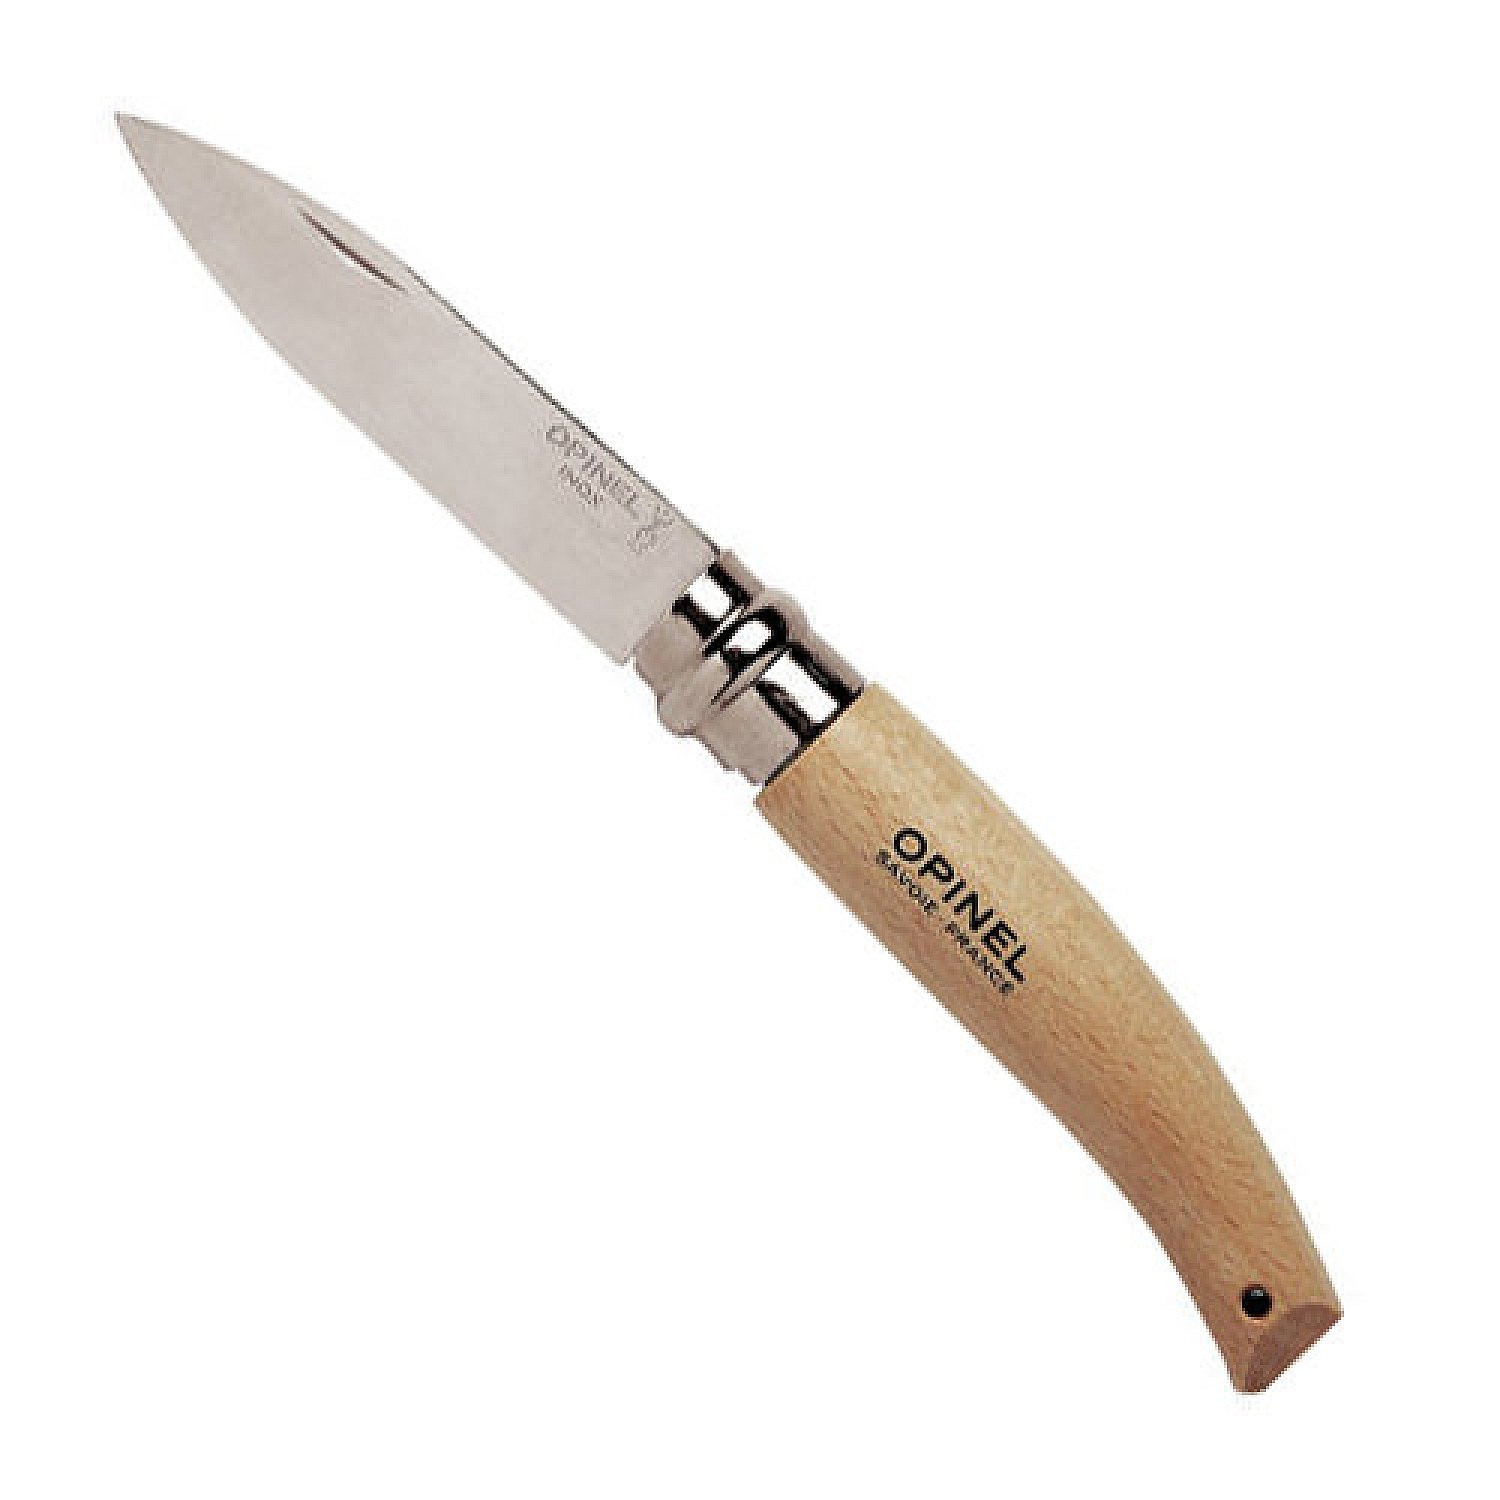 Opinel Harvest Knife - Garden Knife No. 8 Stainless